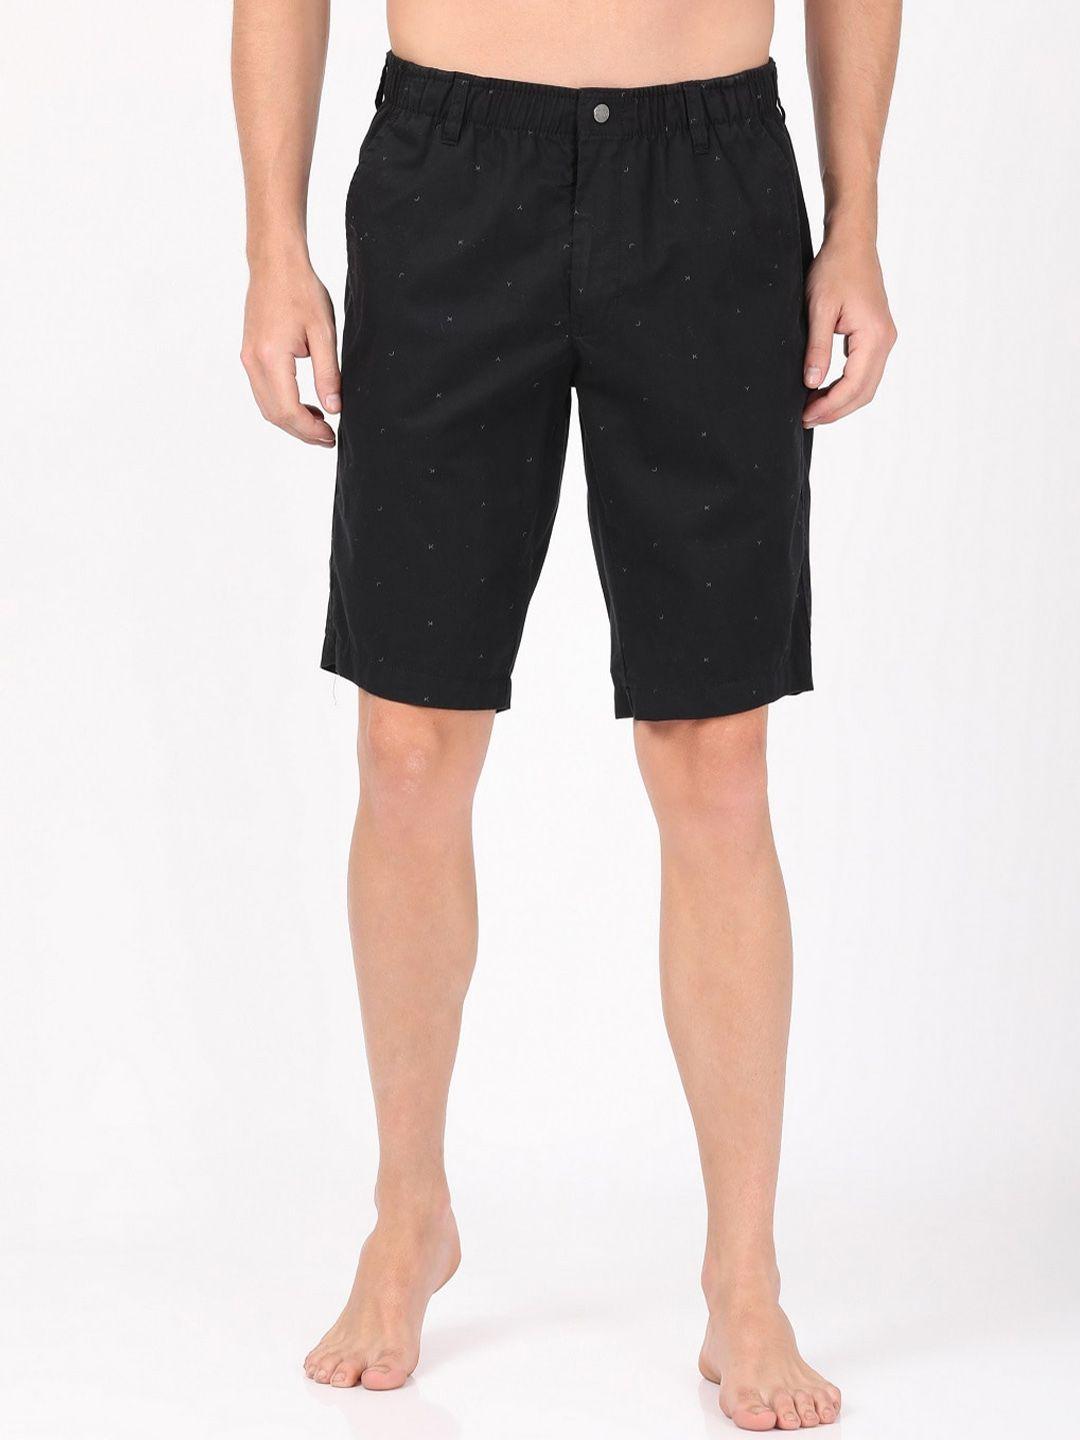 jockey-men-black-printed-shorts